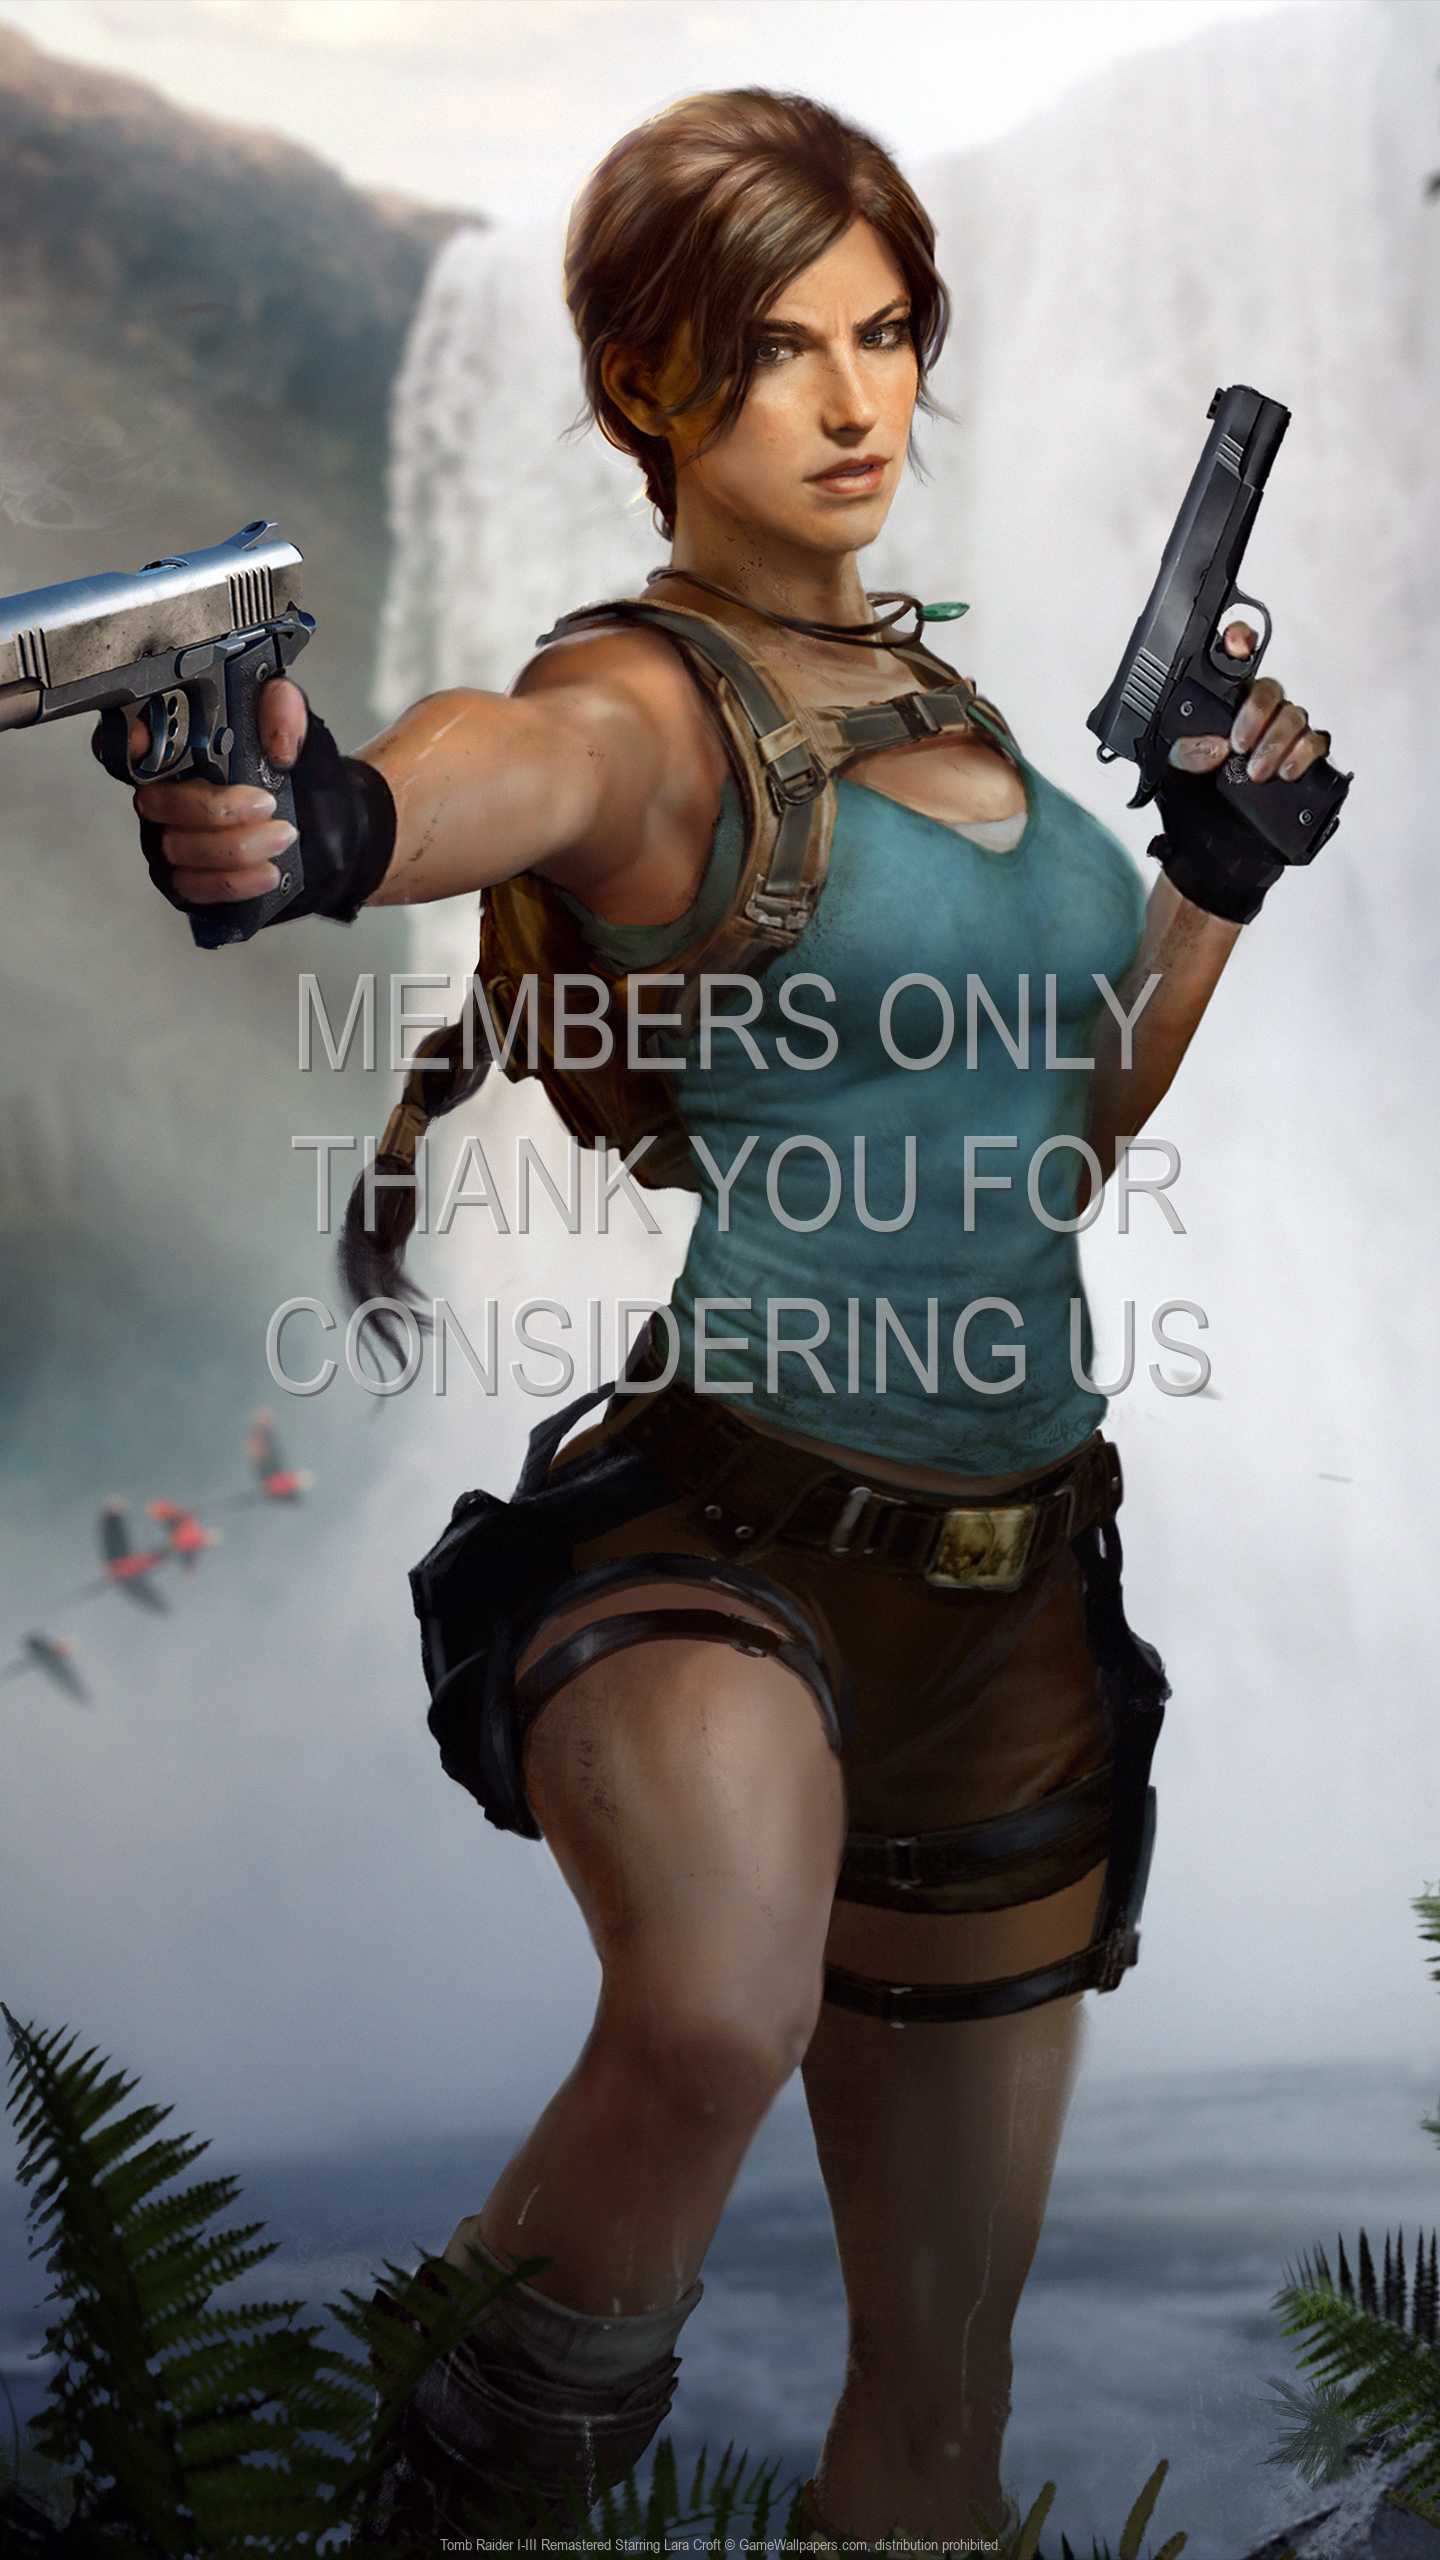 Tomb Raider I-III Remastered Starring Lara Croft 1440p%20Vertical Mobile wallpaper or background 02